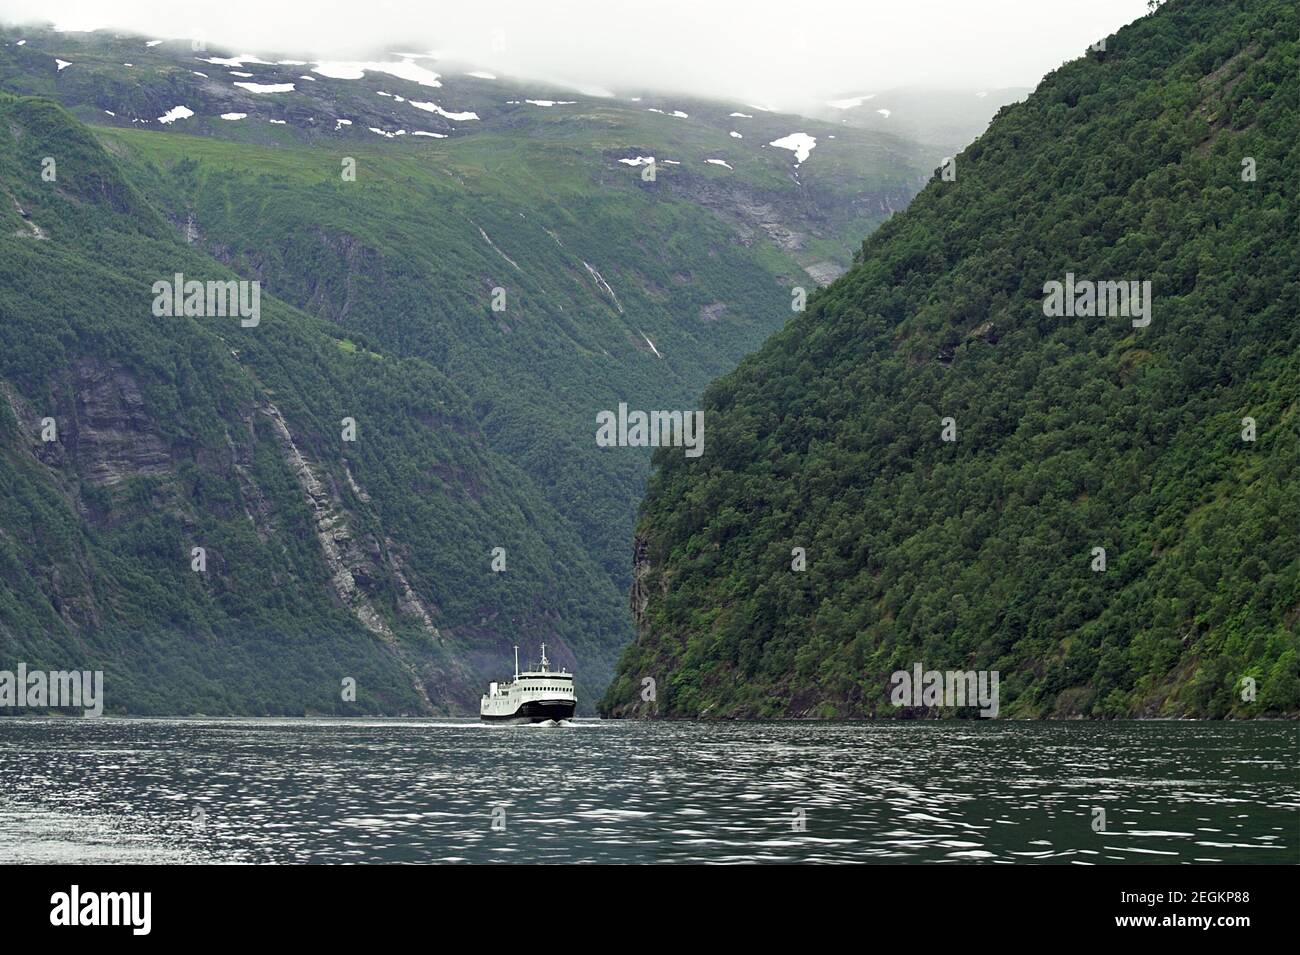 Geirangerfjorden, Norvège, Norwegen; UN paysage typique de fjord norvégien. Eine typisch norwegische Fjordlandschaft. Ferry traversant le fjord. Banque D'Images